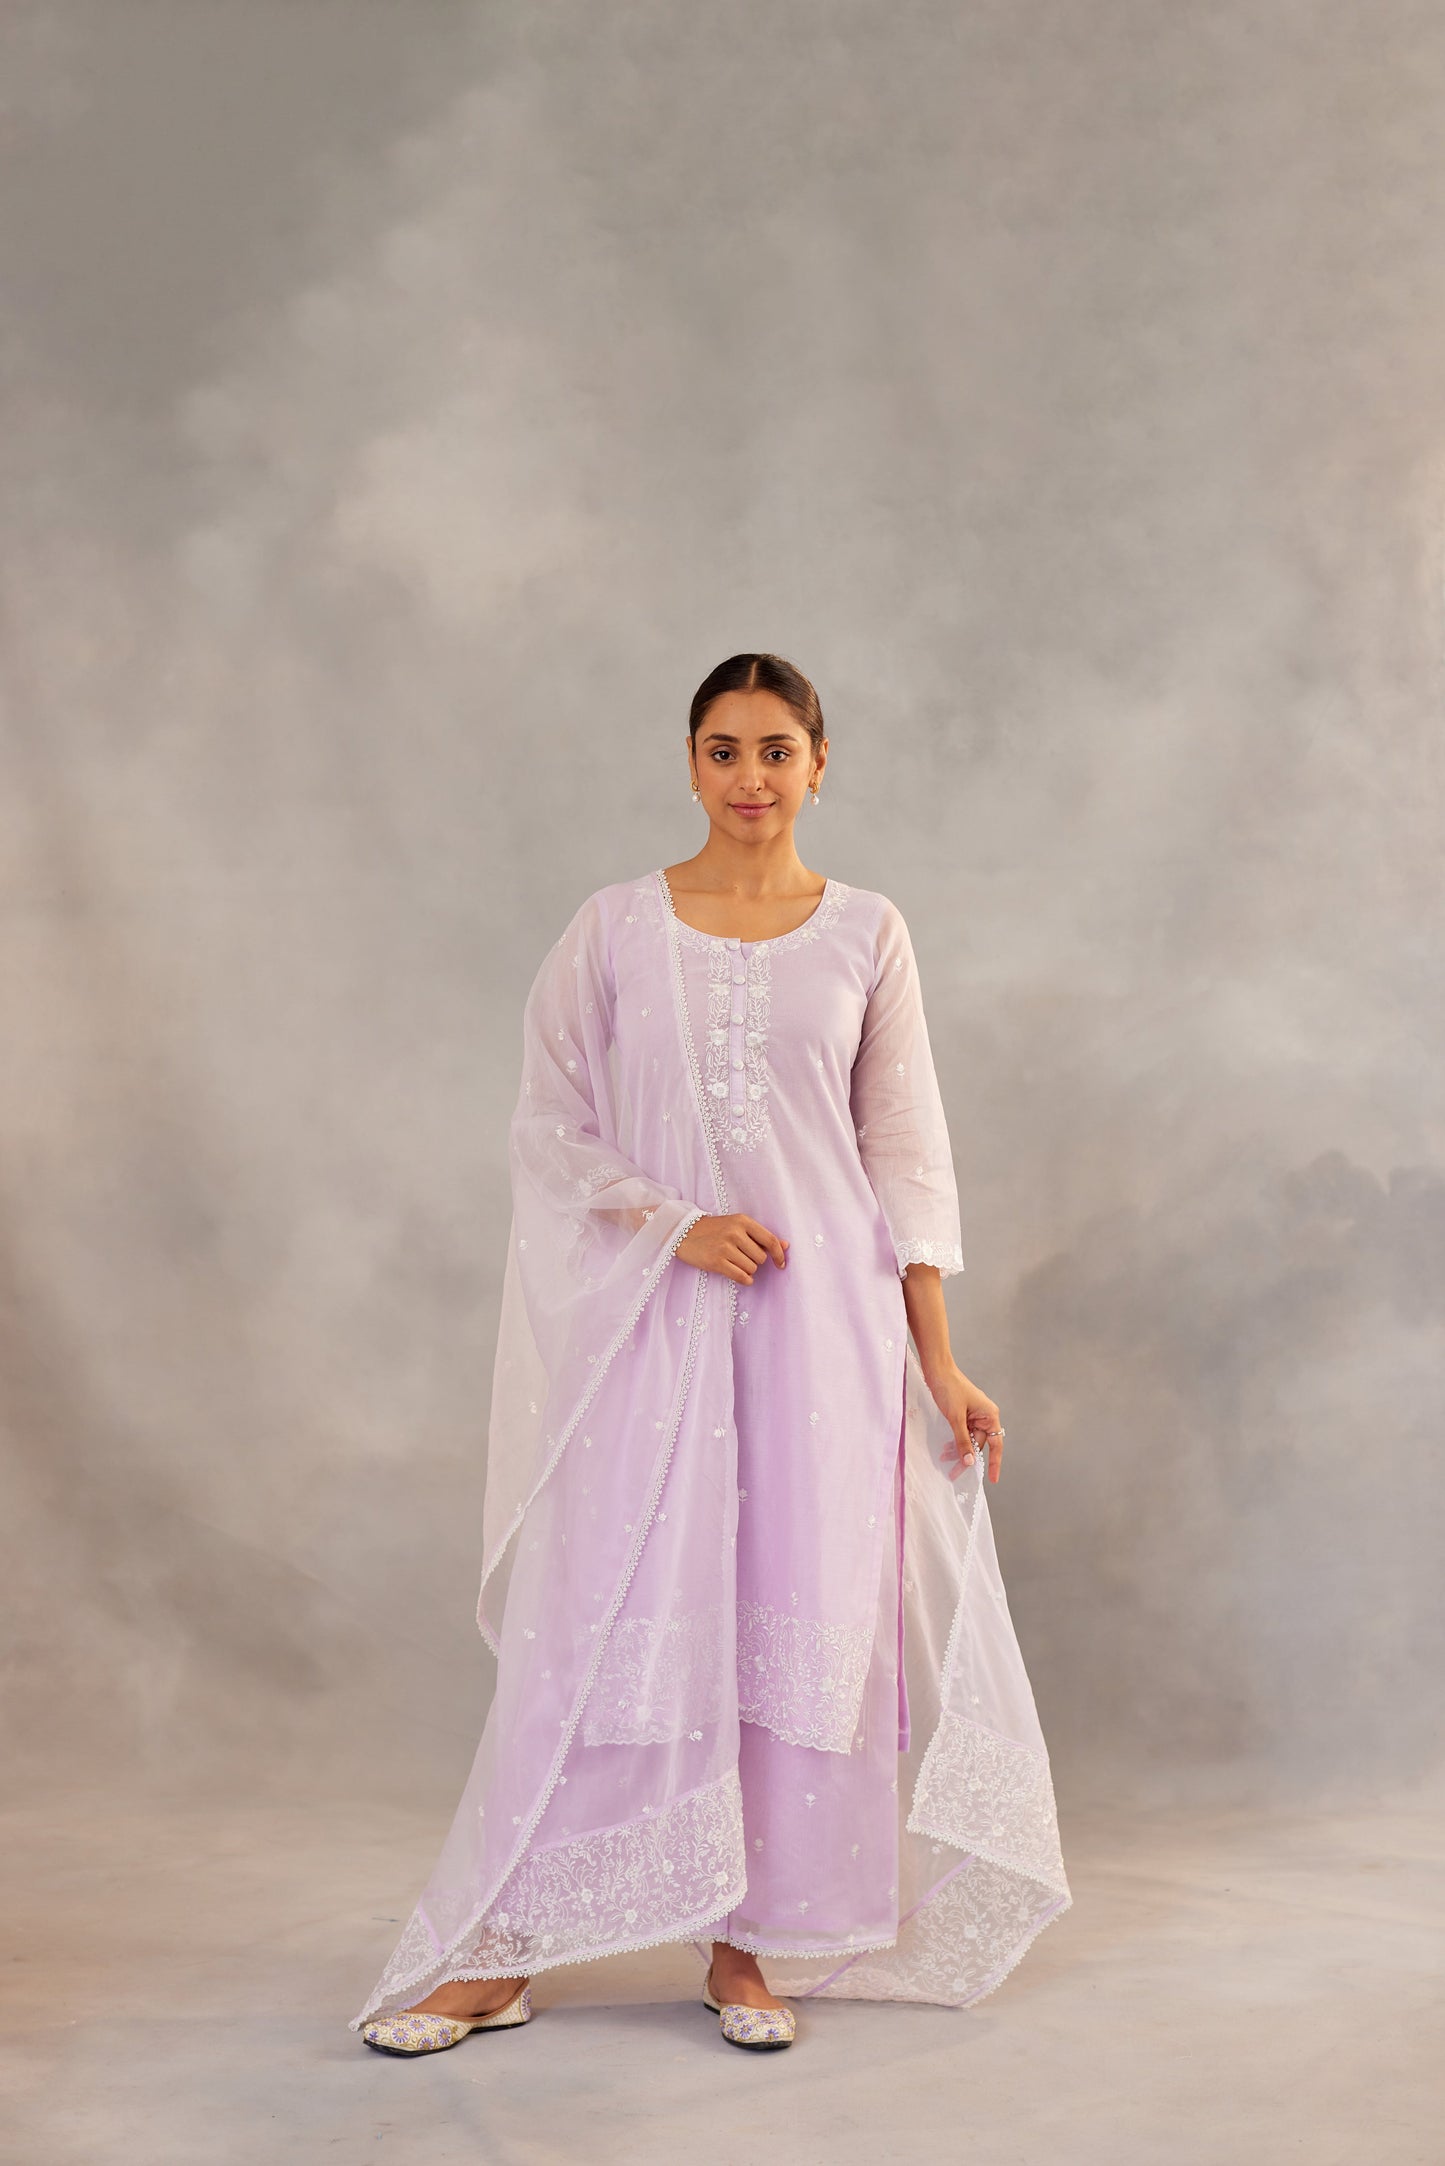 Shreya Lakhani in Aparajita - Lavender Chanderi Embroidered Suit Set.